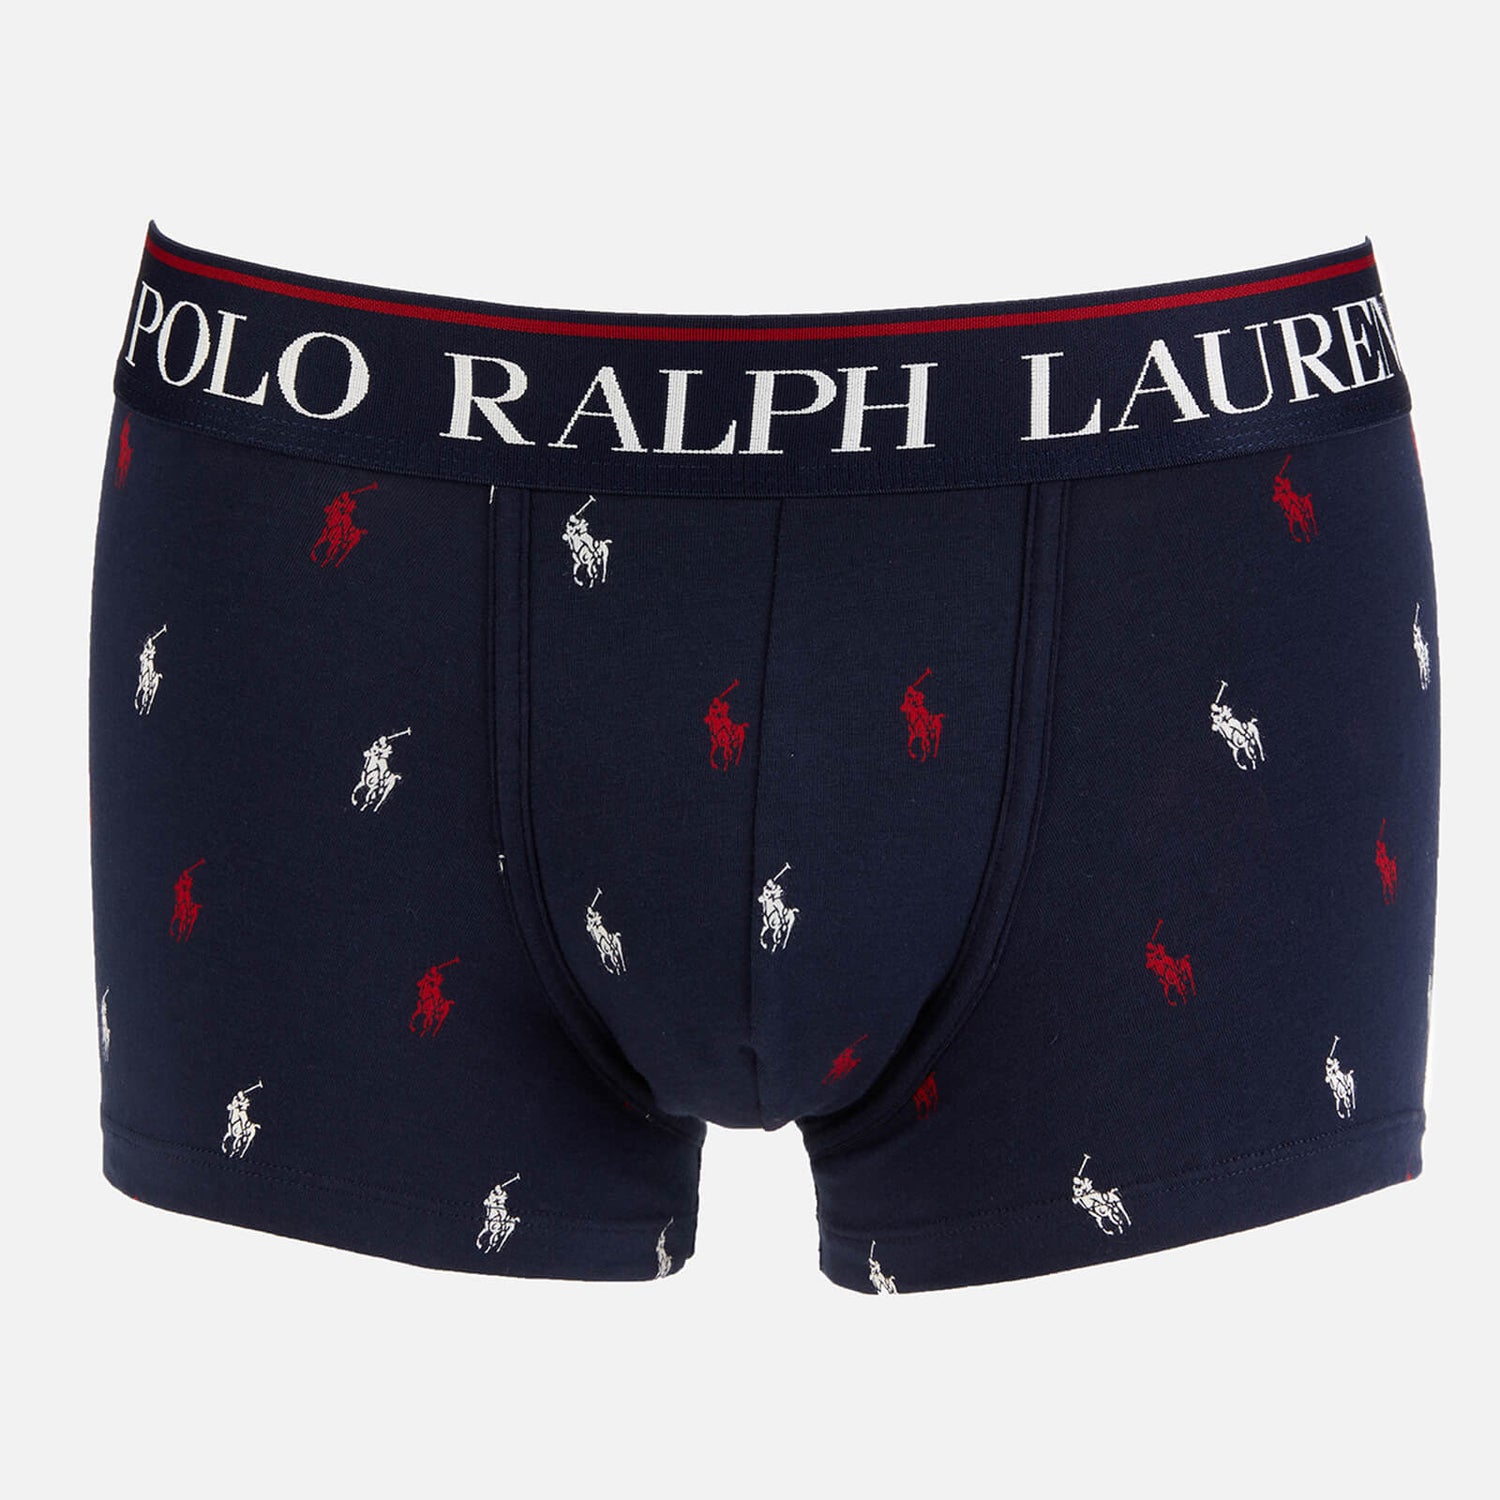 Polo Ralph Lauren Men's All Over Print Trunk Boxer Shorts - Cruise Navy